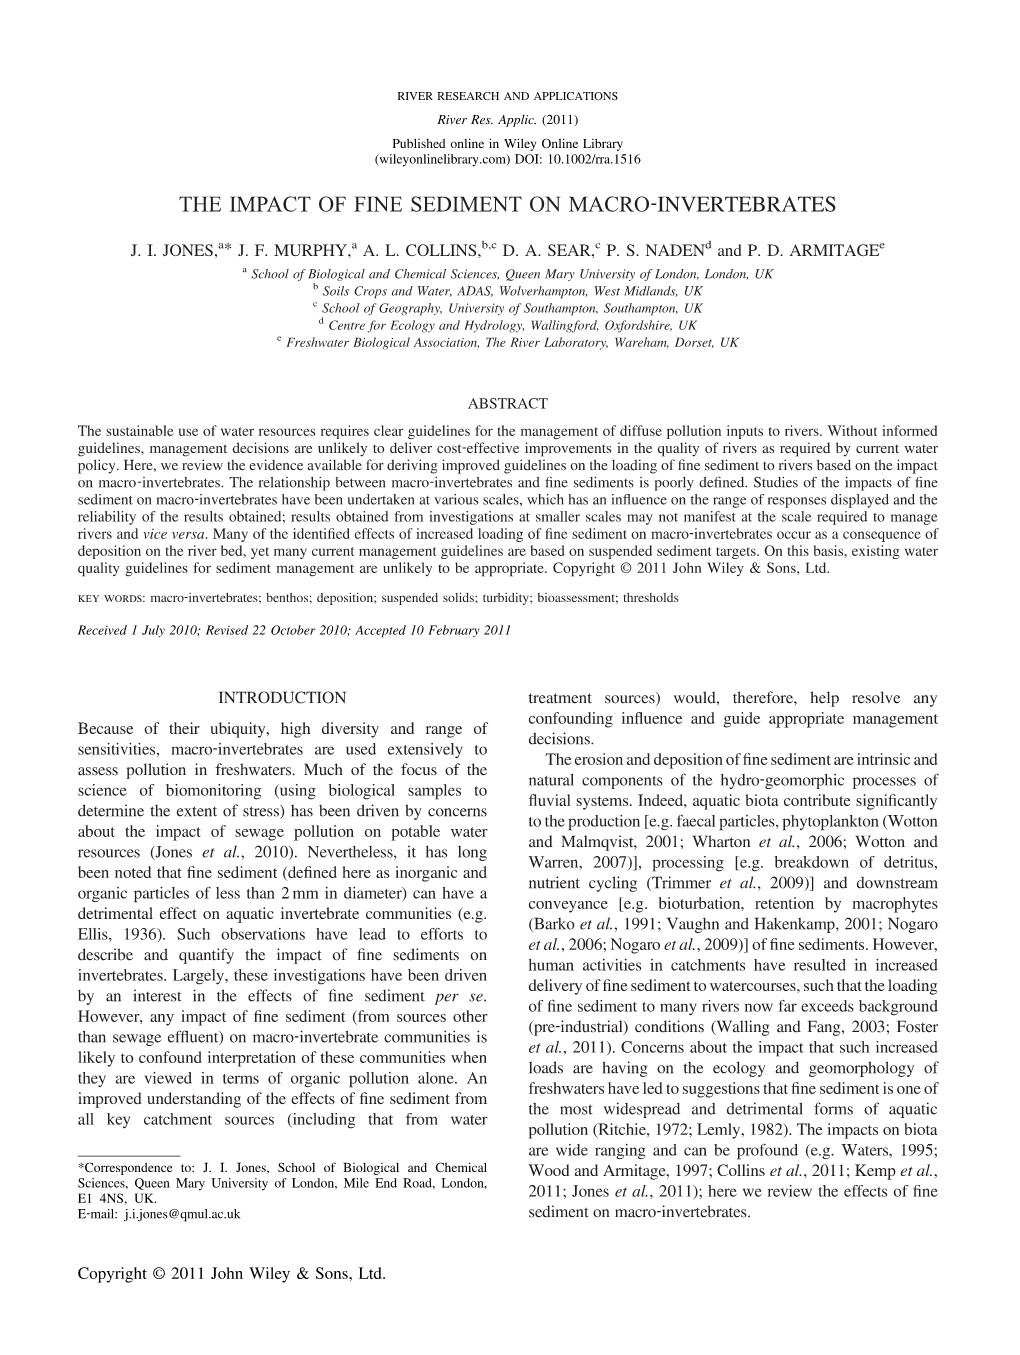 The Impact of Fine Sediment on Macroinvertebrates